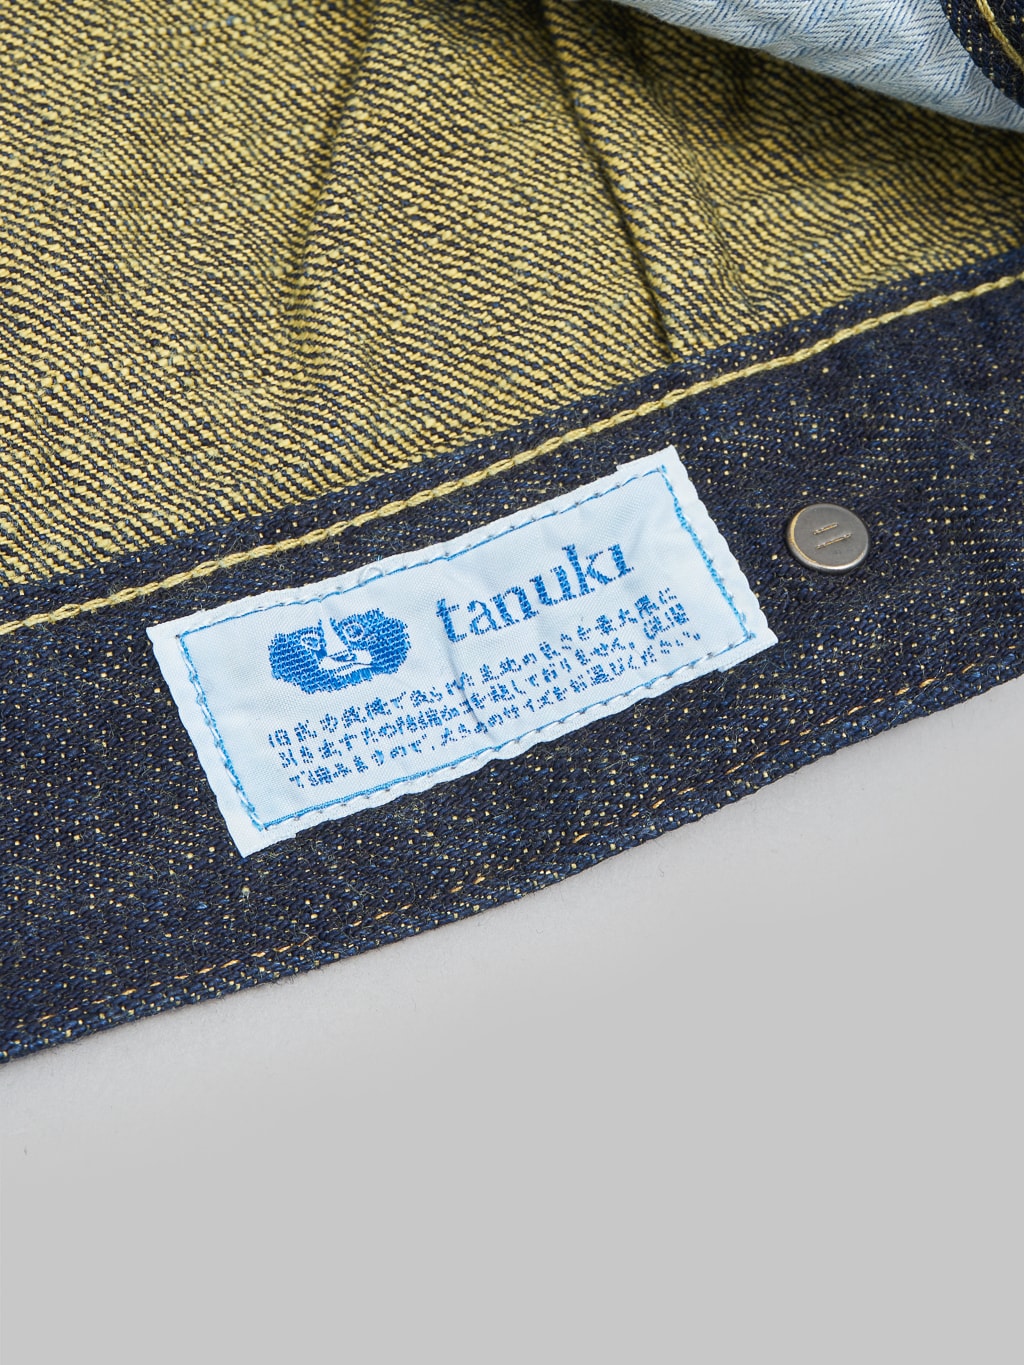 Tanuki soga selvedge denim type II jacket inner brand tag